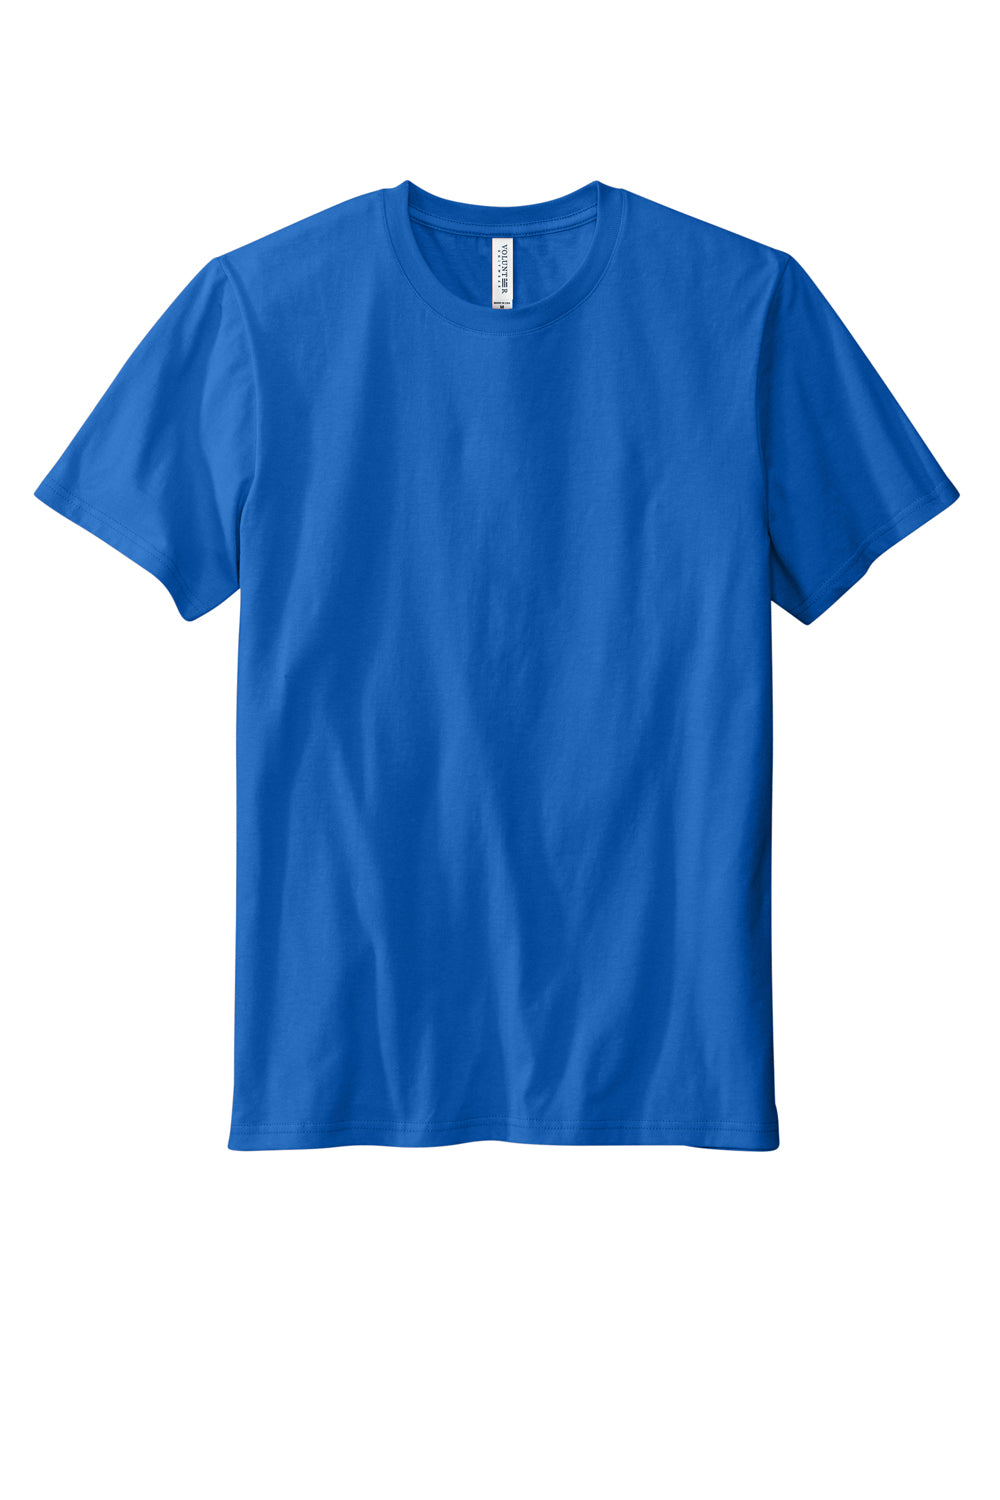 Volunteer Knitwear VL45 Daily Short Sleeve Crewneck T-Shirt True Royal Blue Flat Front